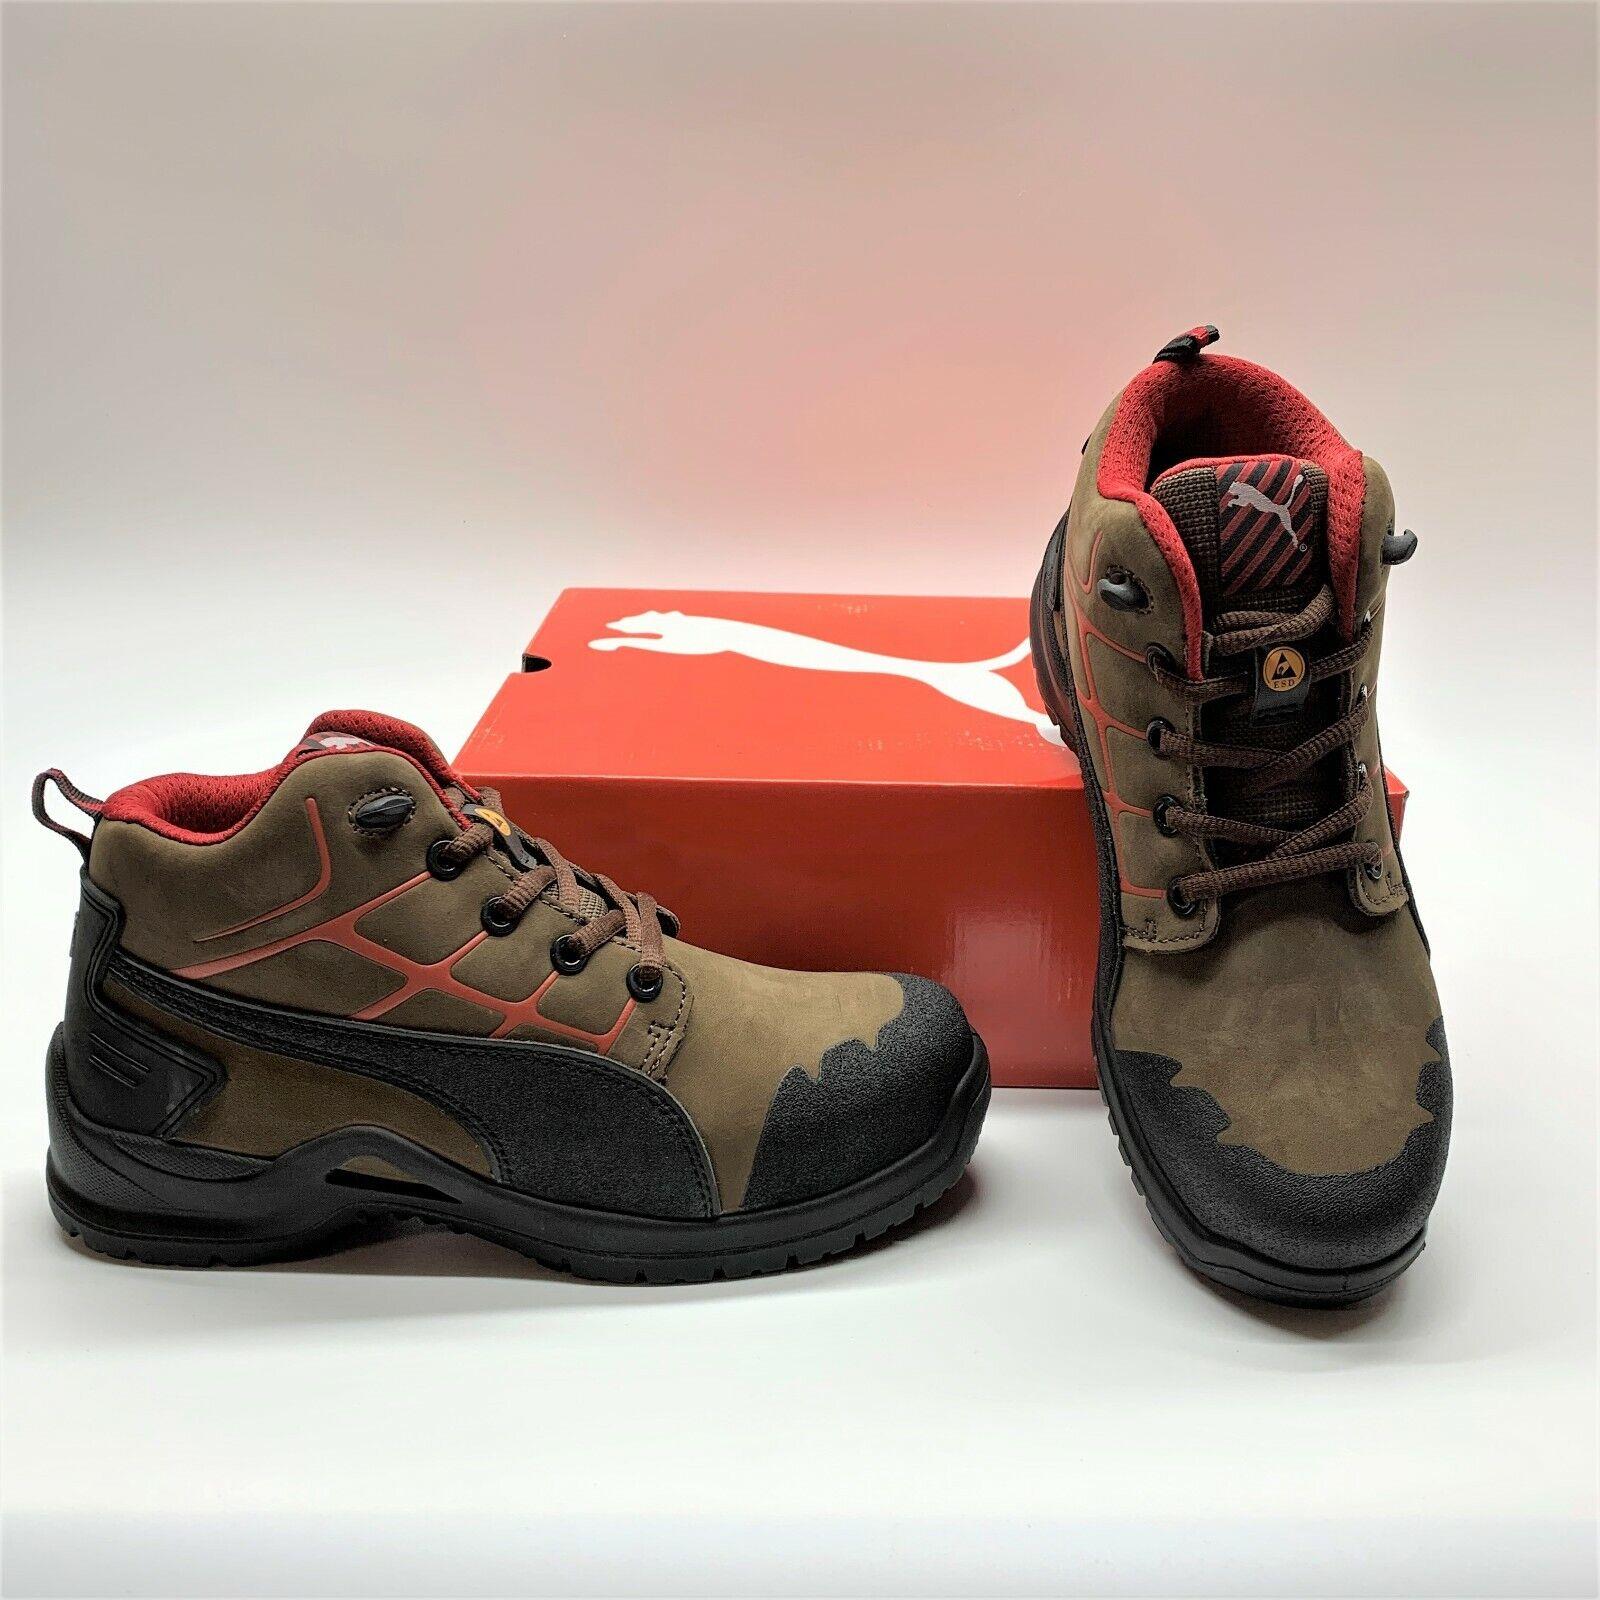 Puma Krypton 634235 Mid Steel Toe Brown Work Boots Sneakers Shoes Womens 8